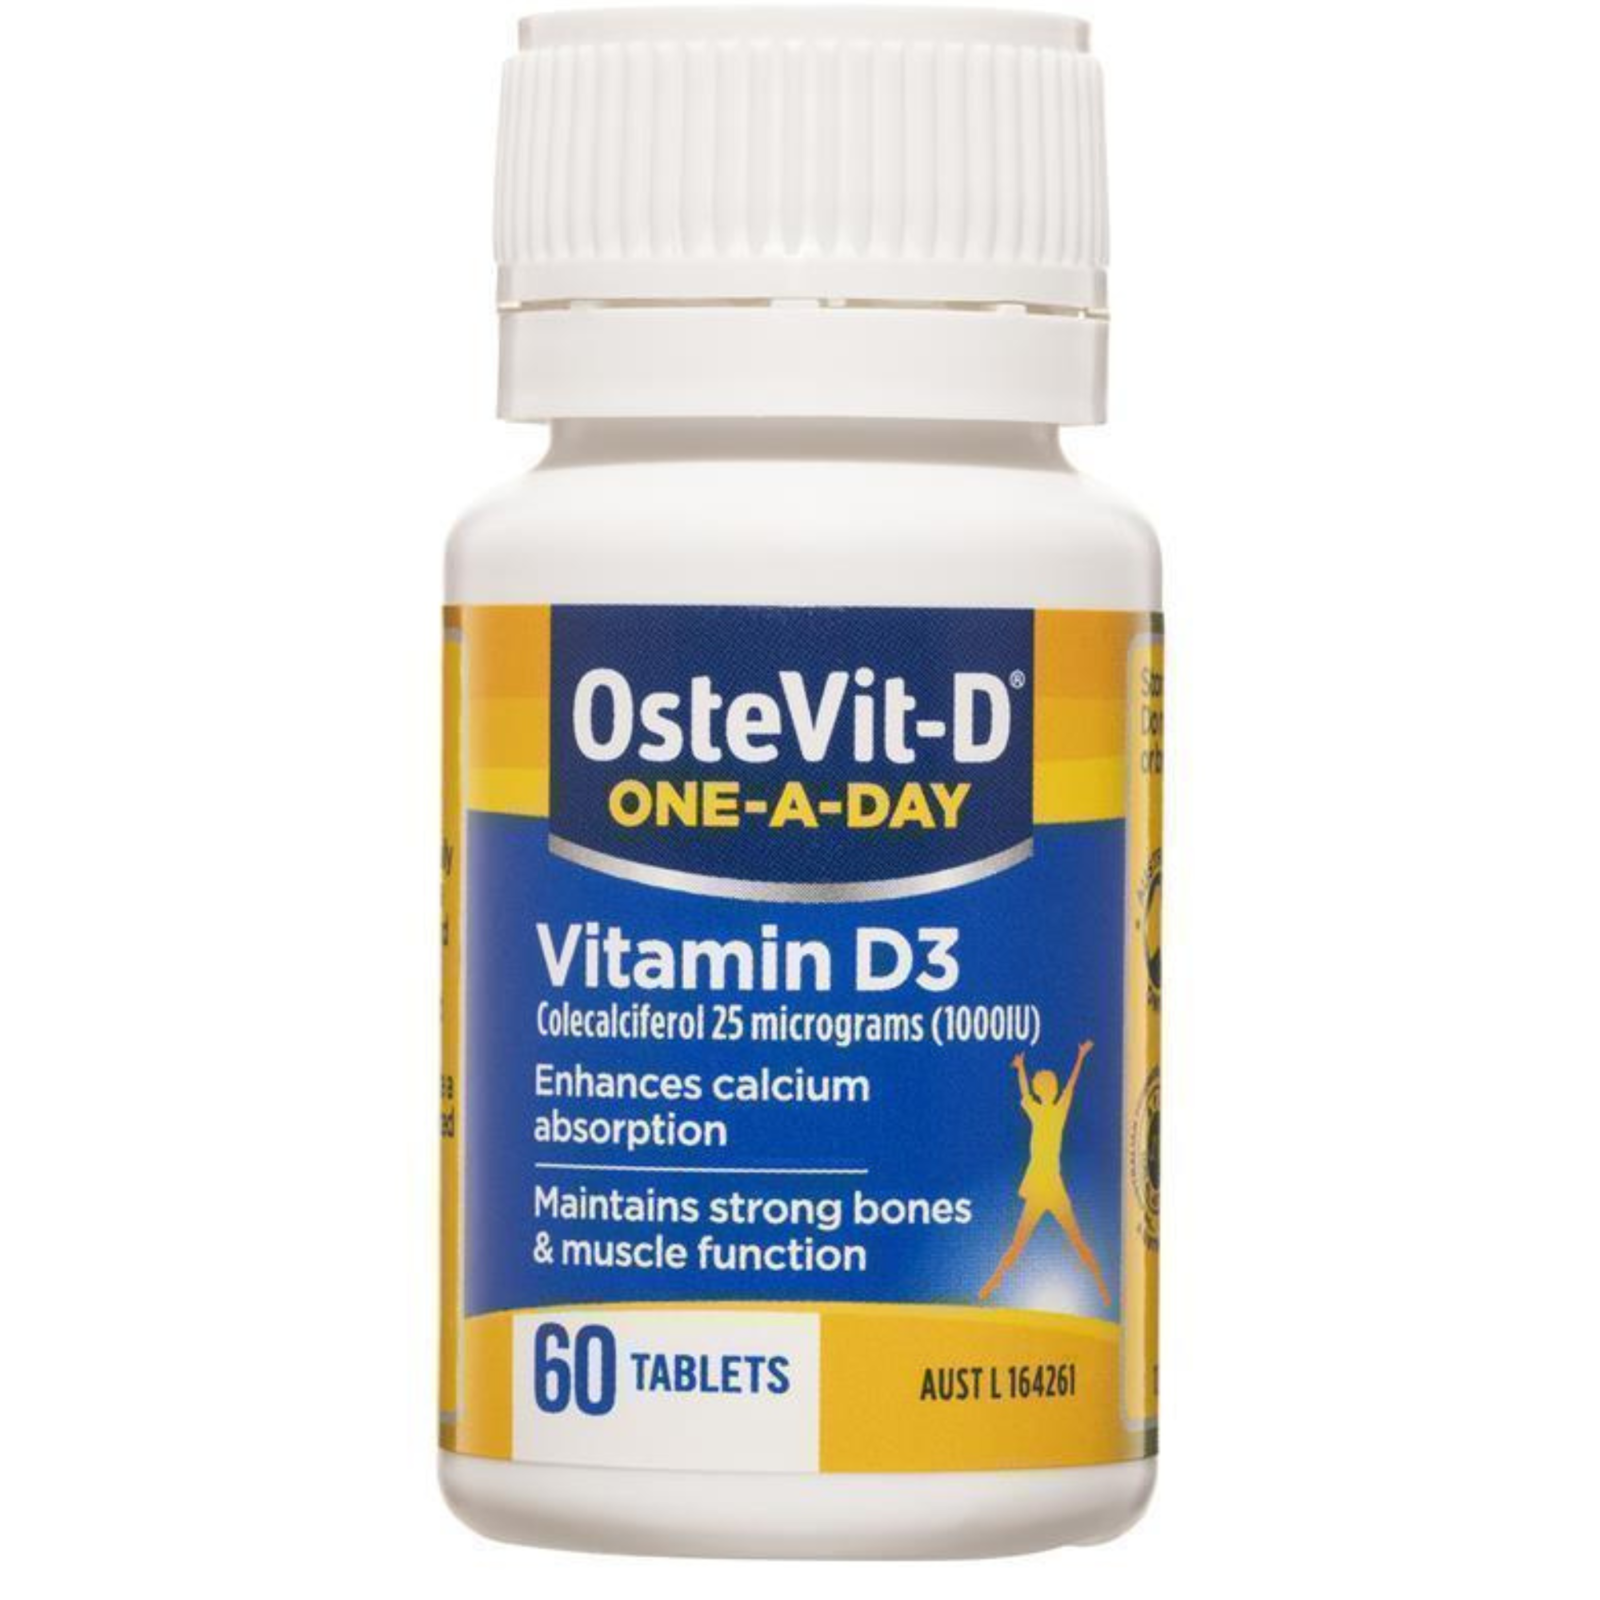 OsteVit-D One-A-Day Vitamin D3 1000IU - $73.59